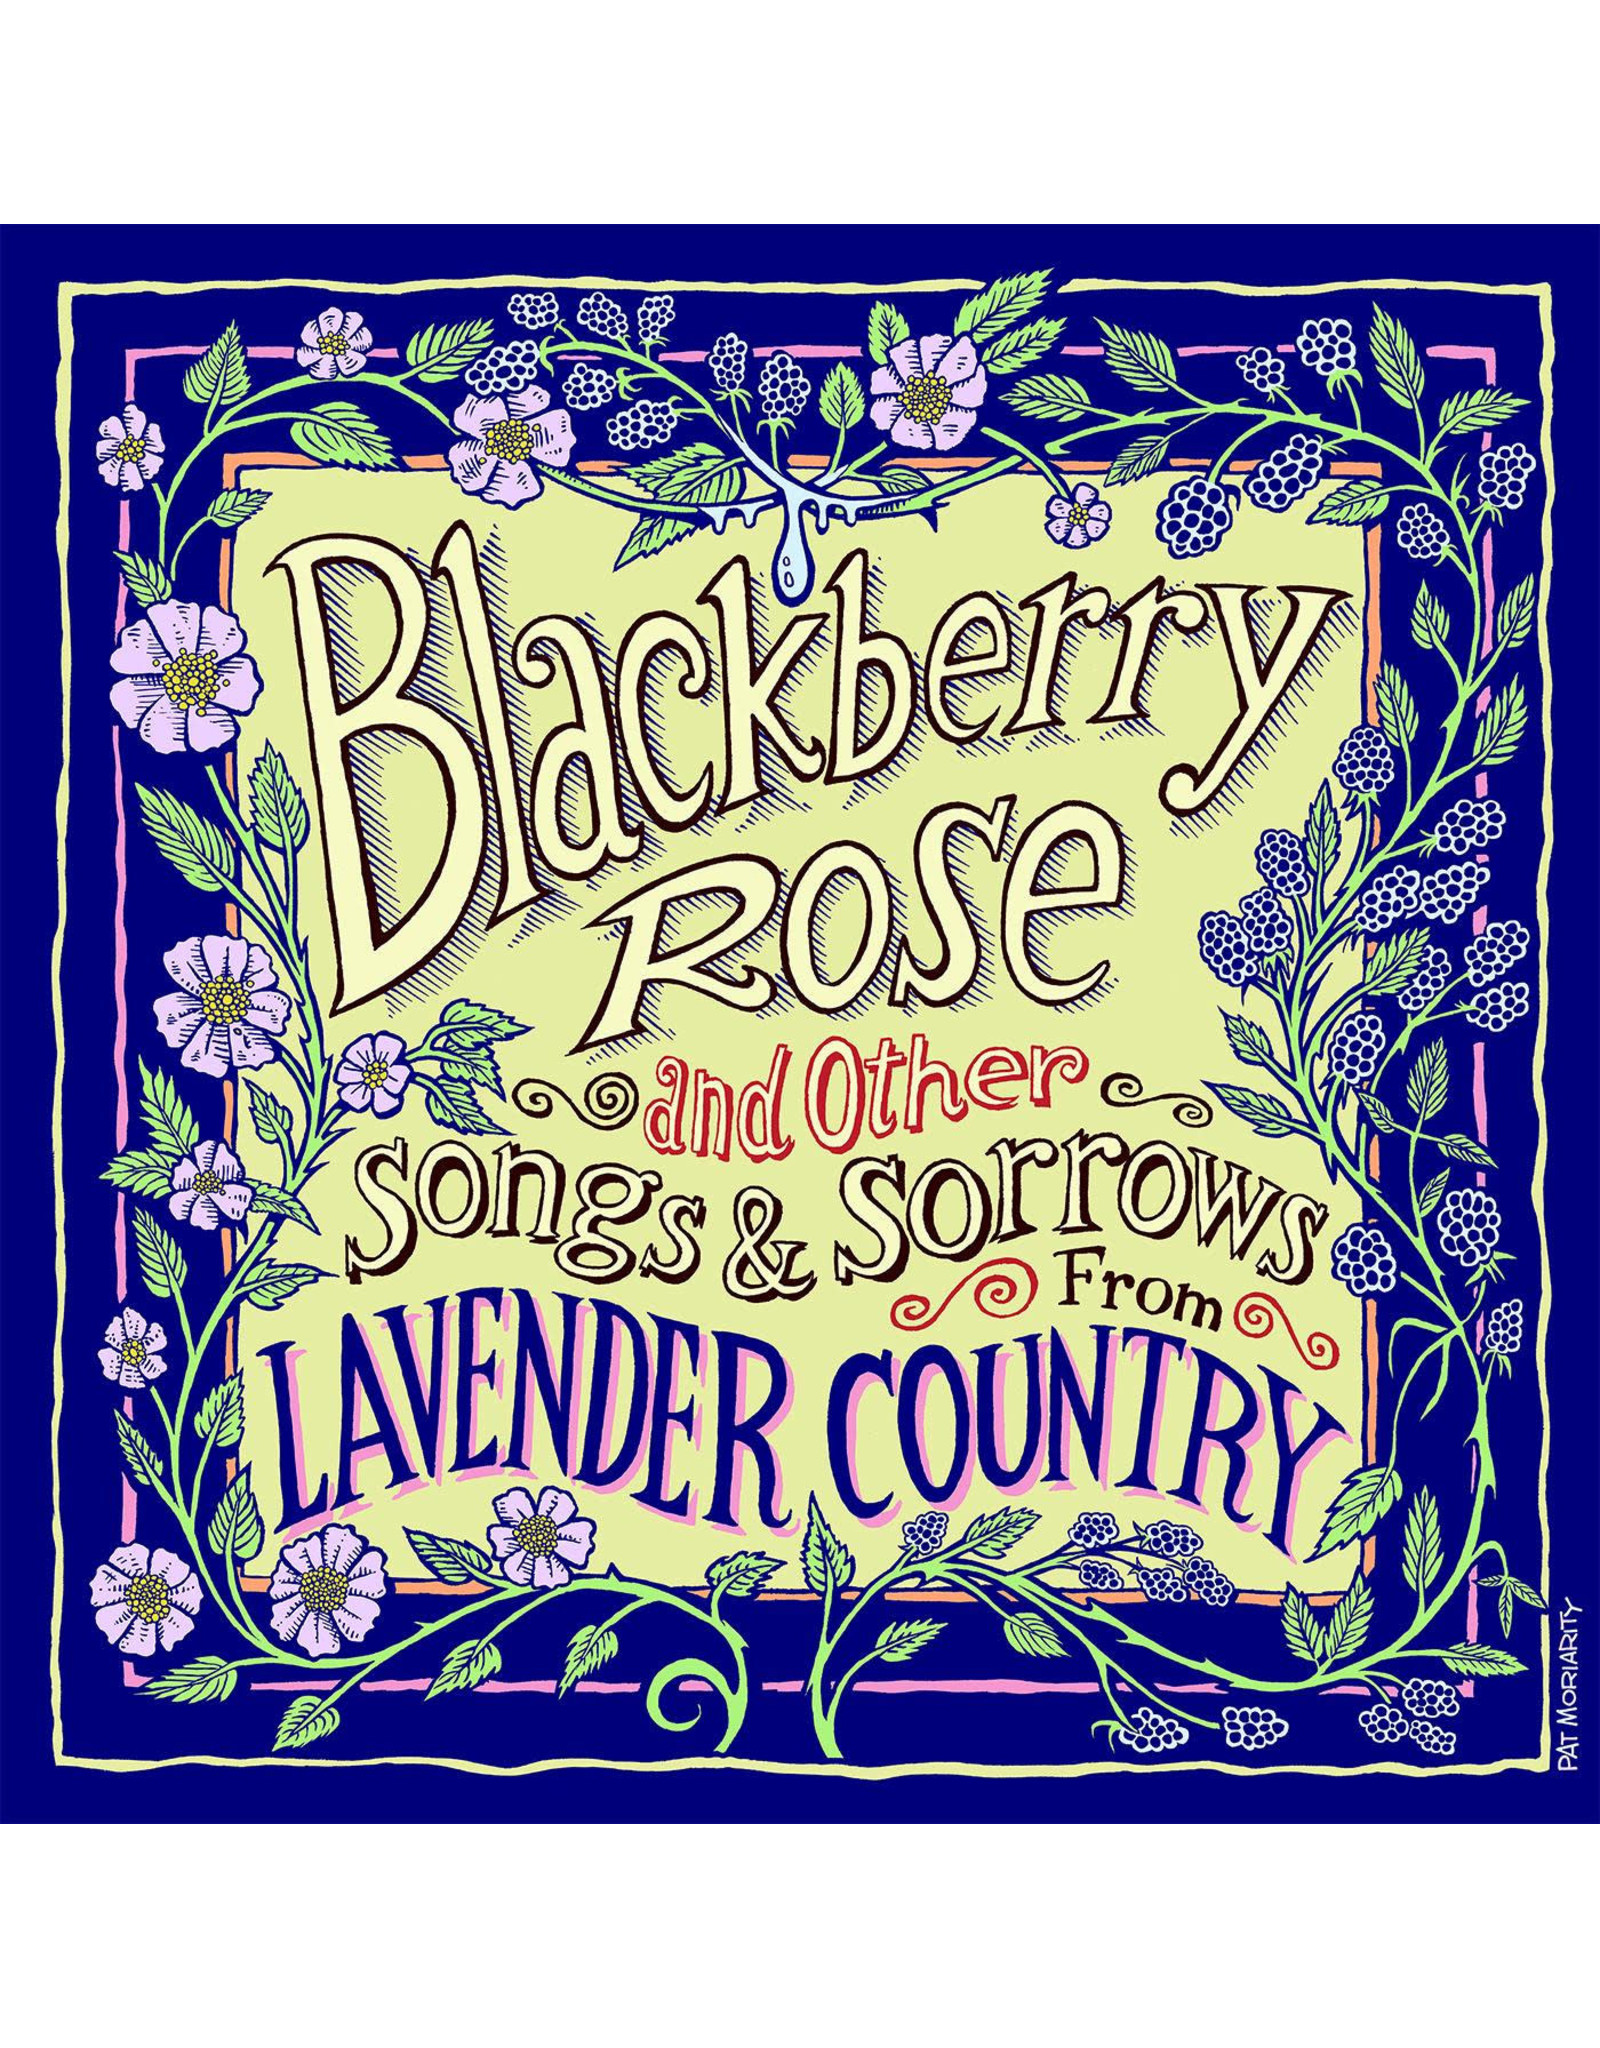 New Vinyl Lavender Country - Blackberry Rose (Ltd., Colored) LP